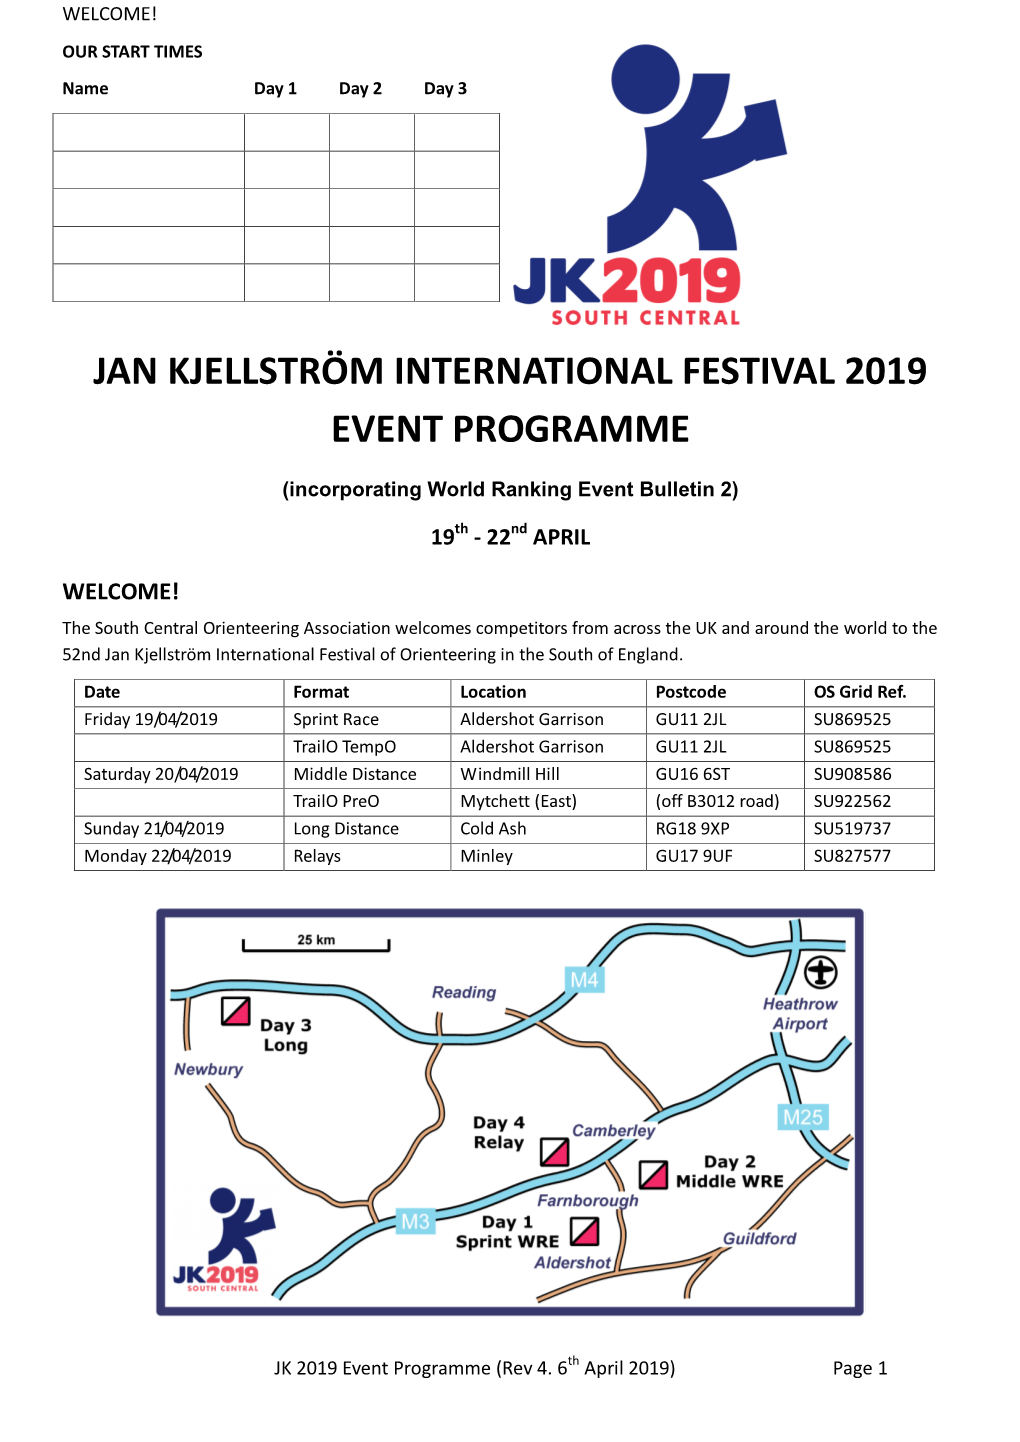 JK 2019 Event Programme (Rev 4